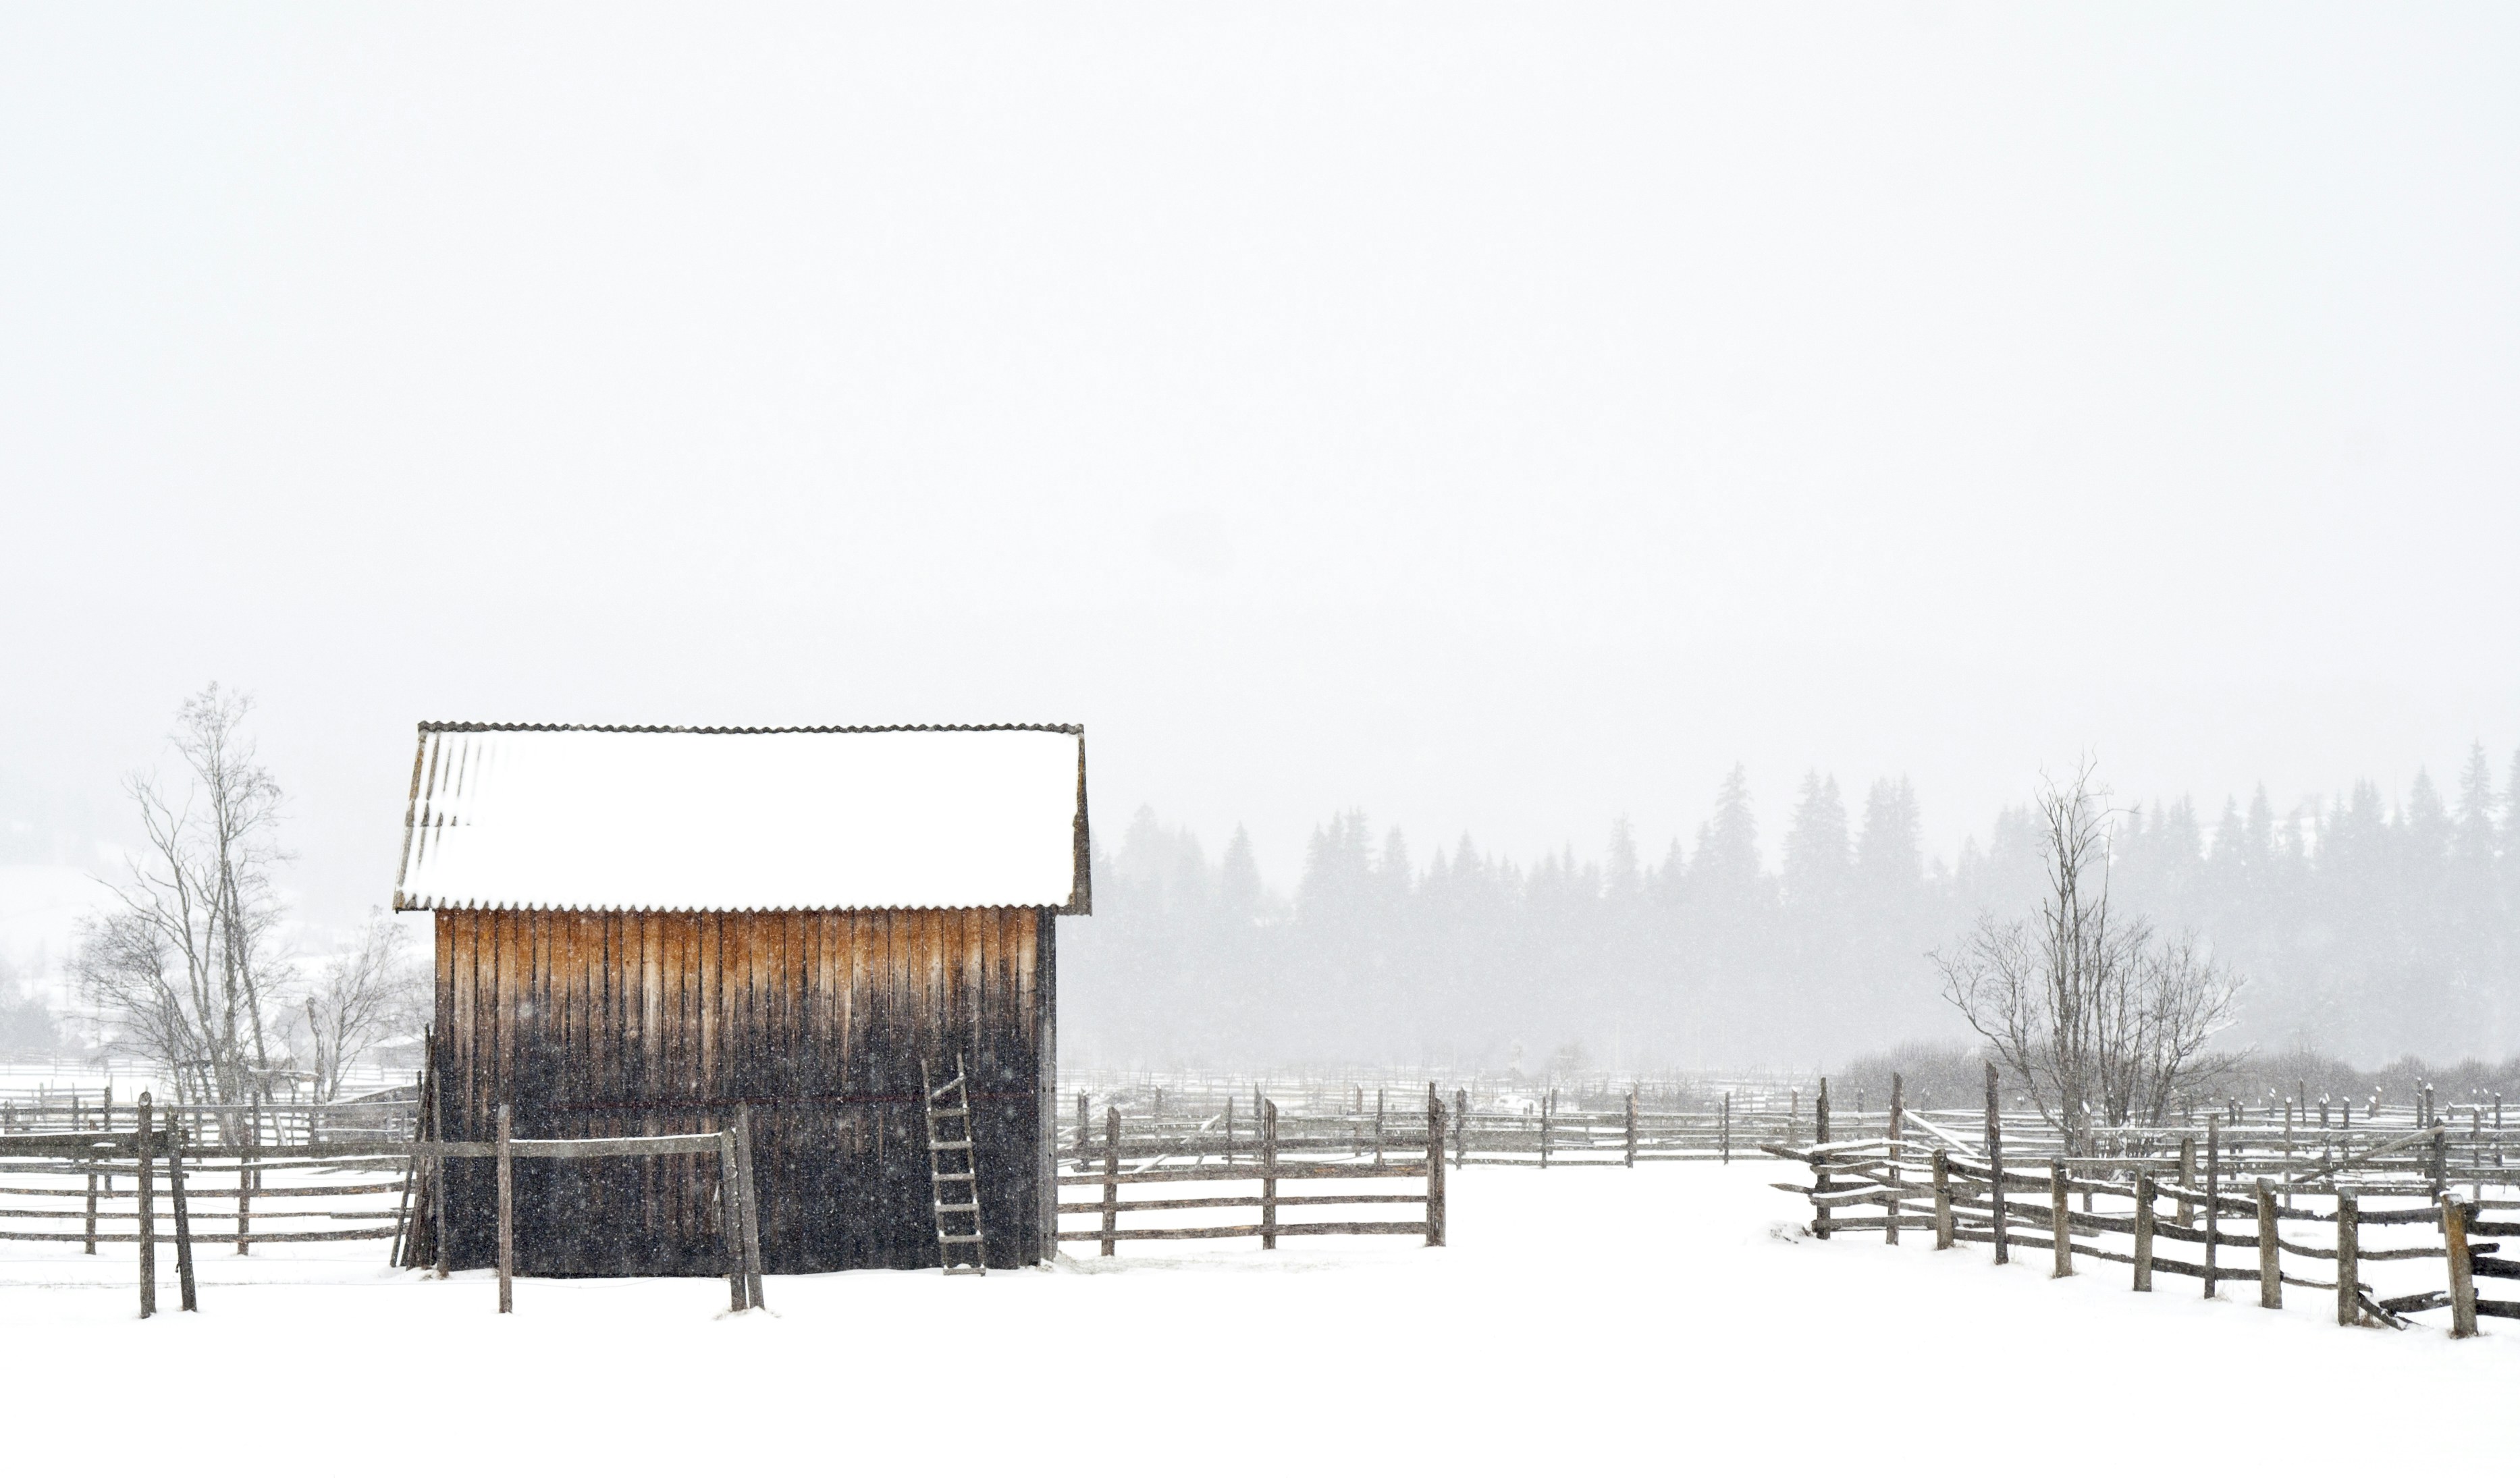 Snow covered barn in wintertime